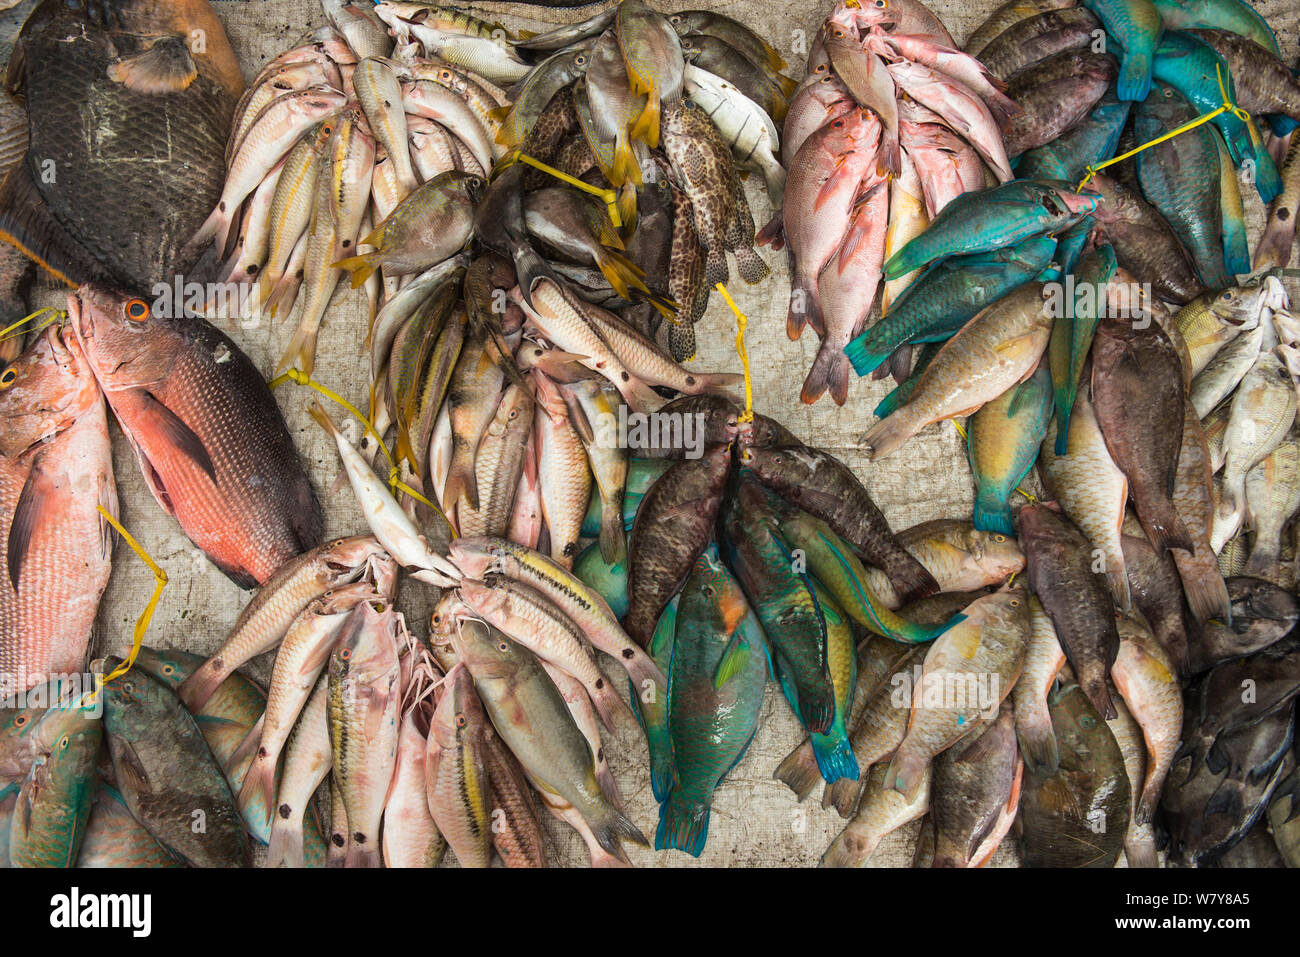 Mixed reef fish for sale, Suva Seafood Market, Viti Levu, Fiji, South Pacific, April 2014. Stock Photo